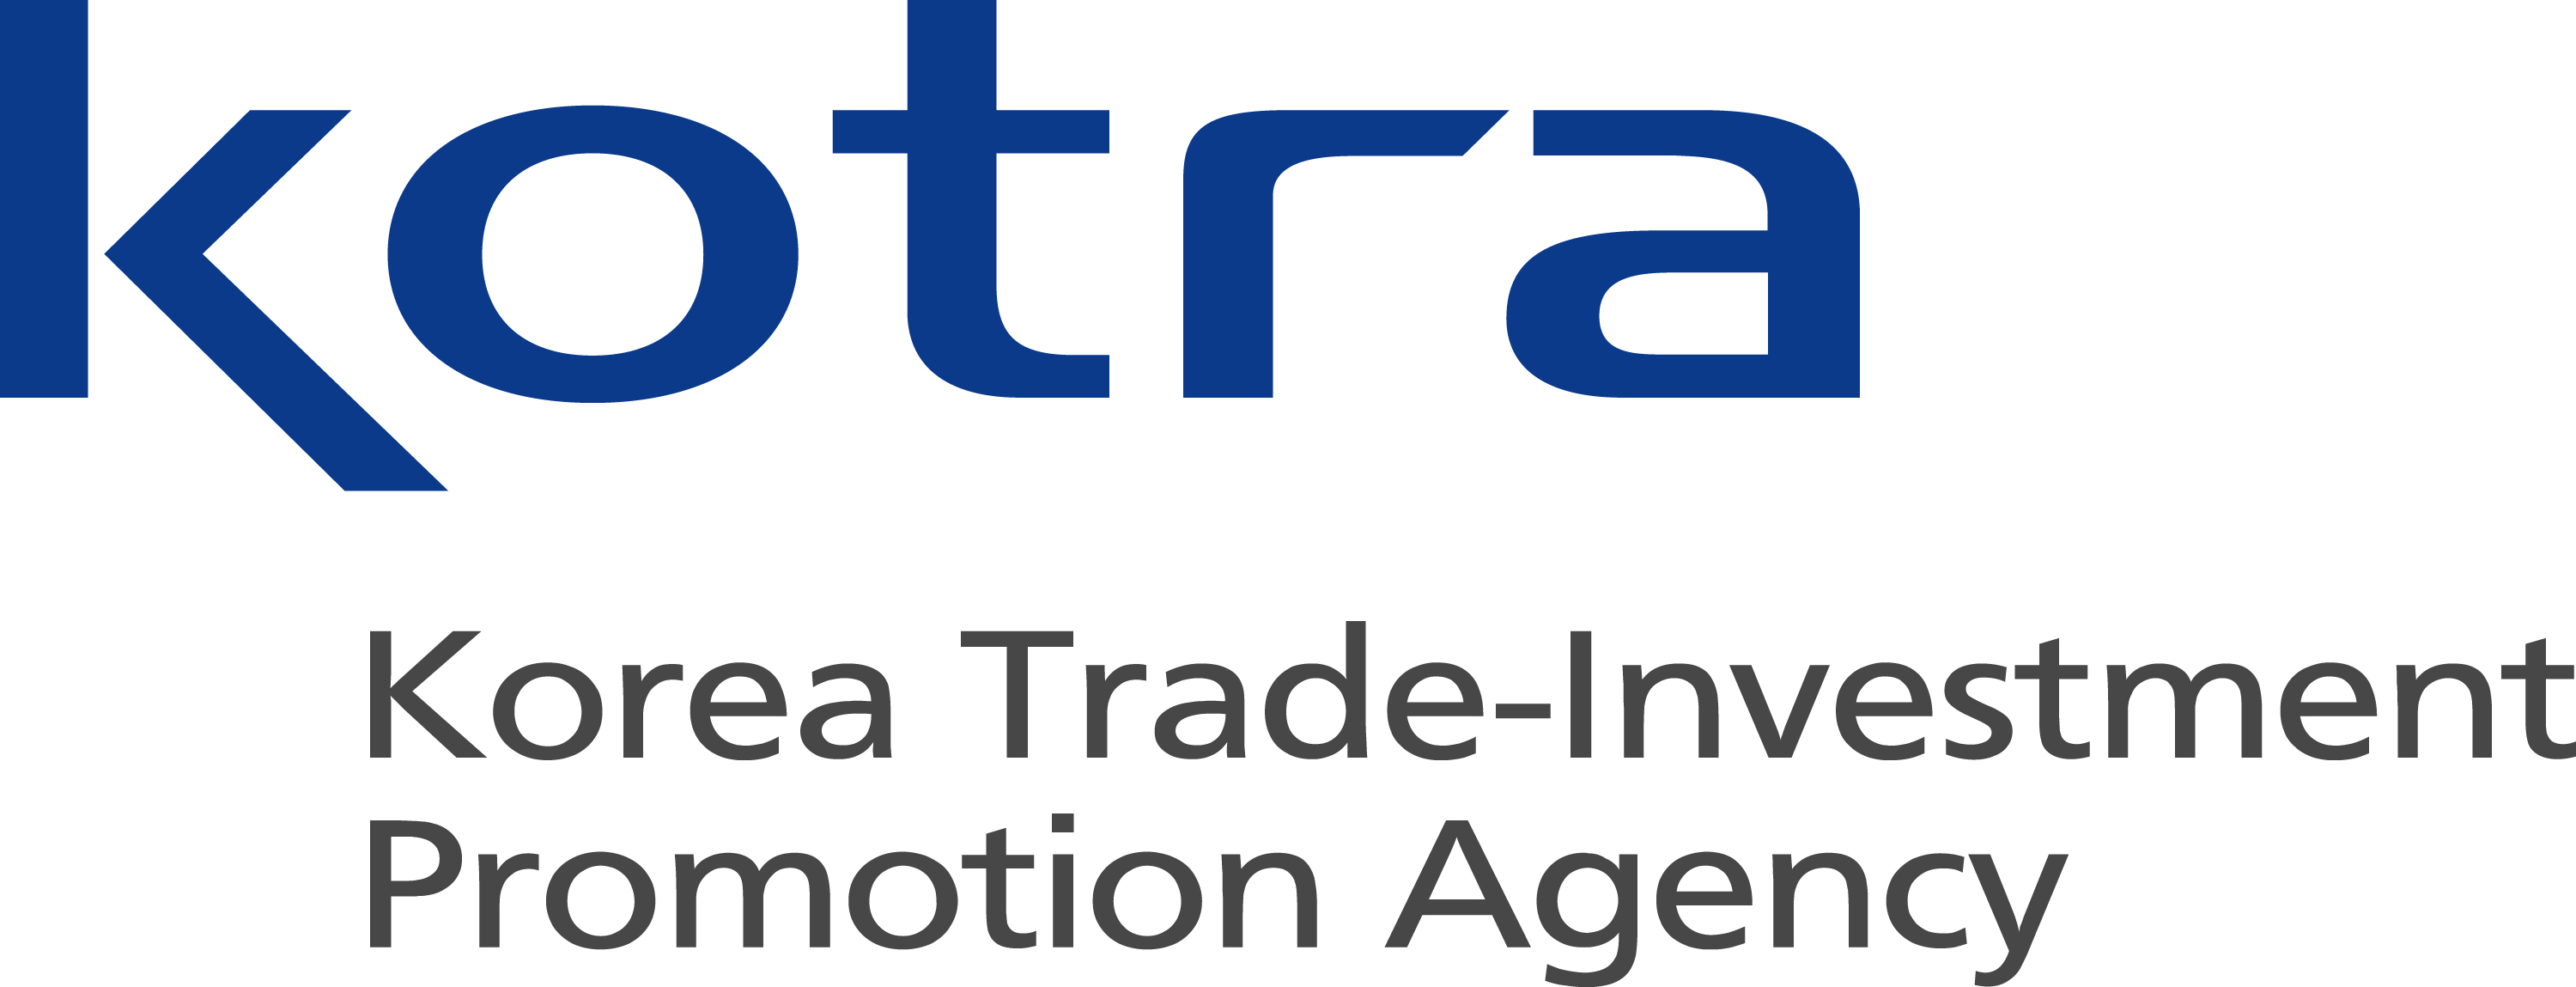 KOTRA_Logo.jpg